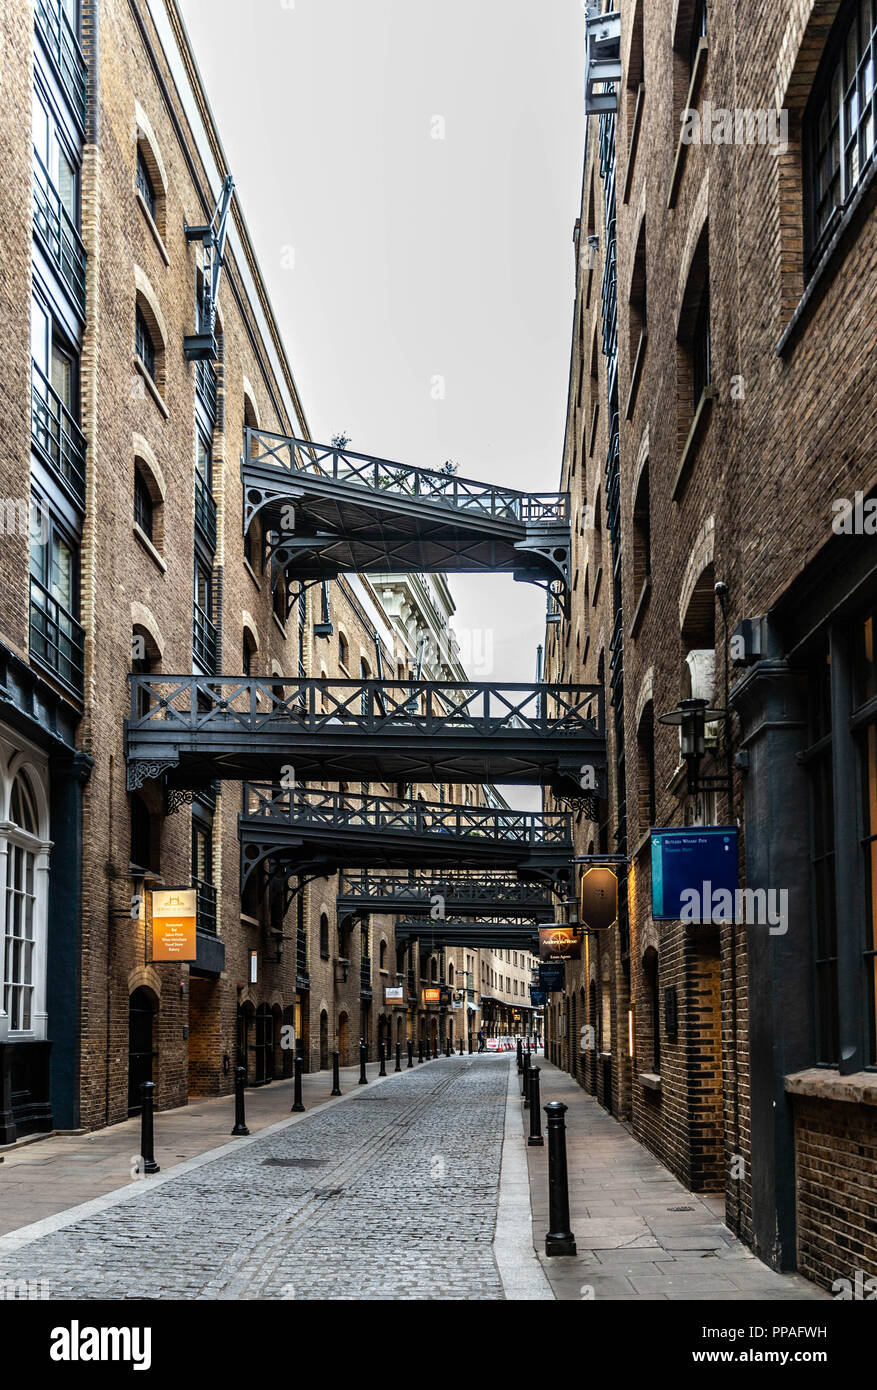 The street Shad Thames and the connecting bridges, Southwark, London, England, UK. Stock Photo